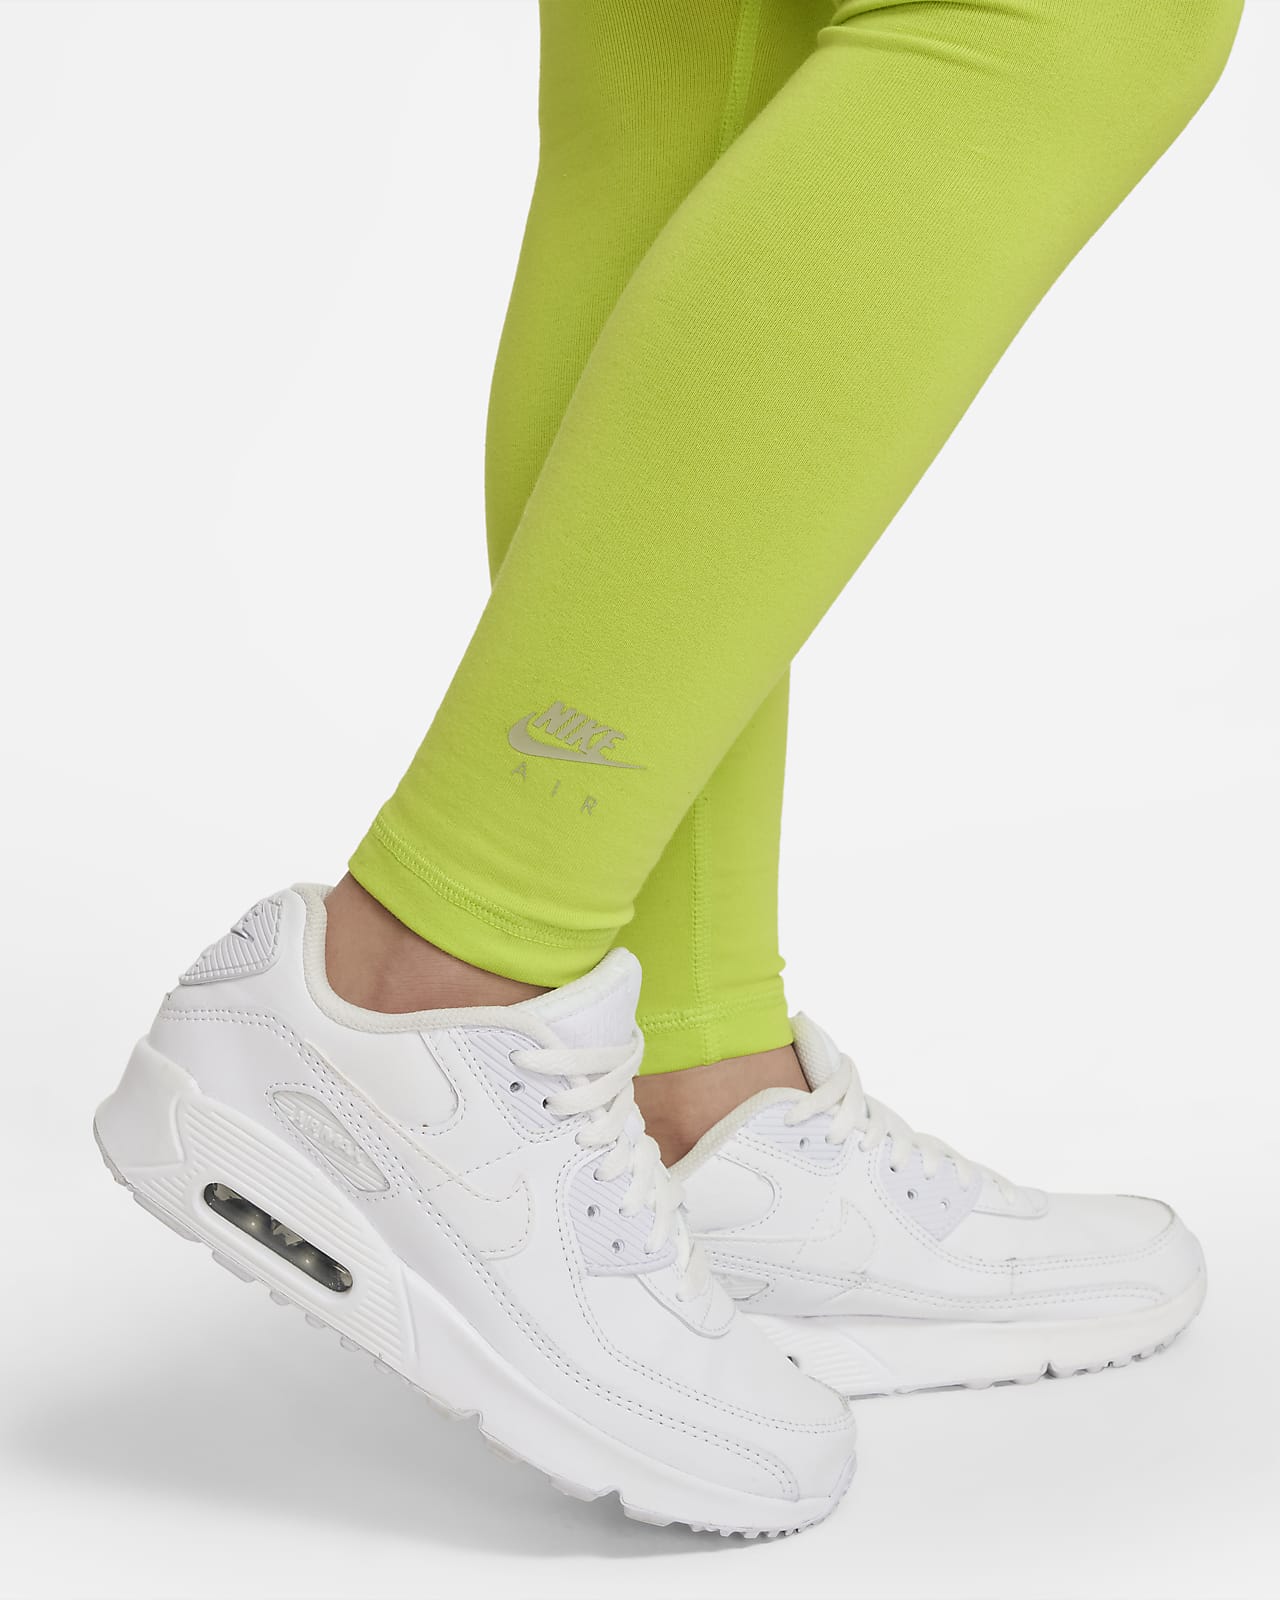 Neon Green Women's Leggings, Plus Size Leggings Yoga Pants - Made in USA/EU  (US Size: 2XL-6XL) | Plus size leggings, Womens workout outfits, Lime green  leggings